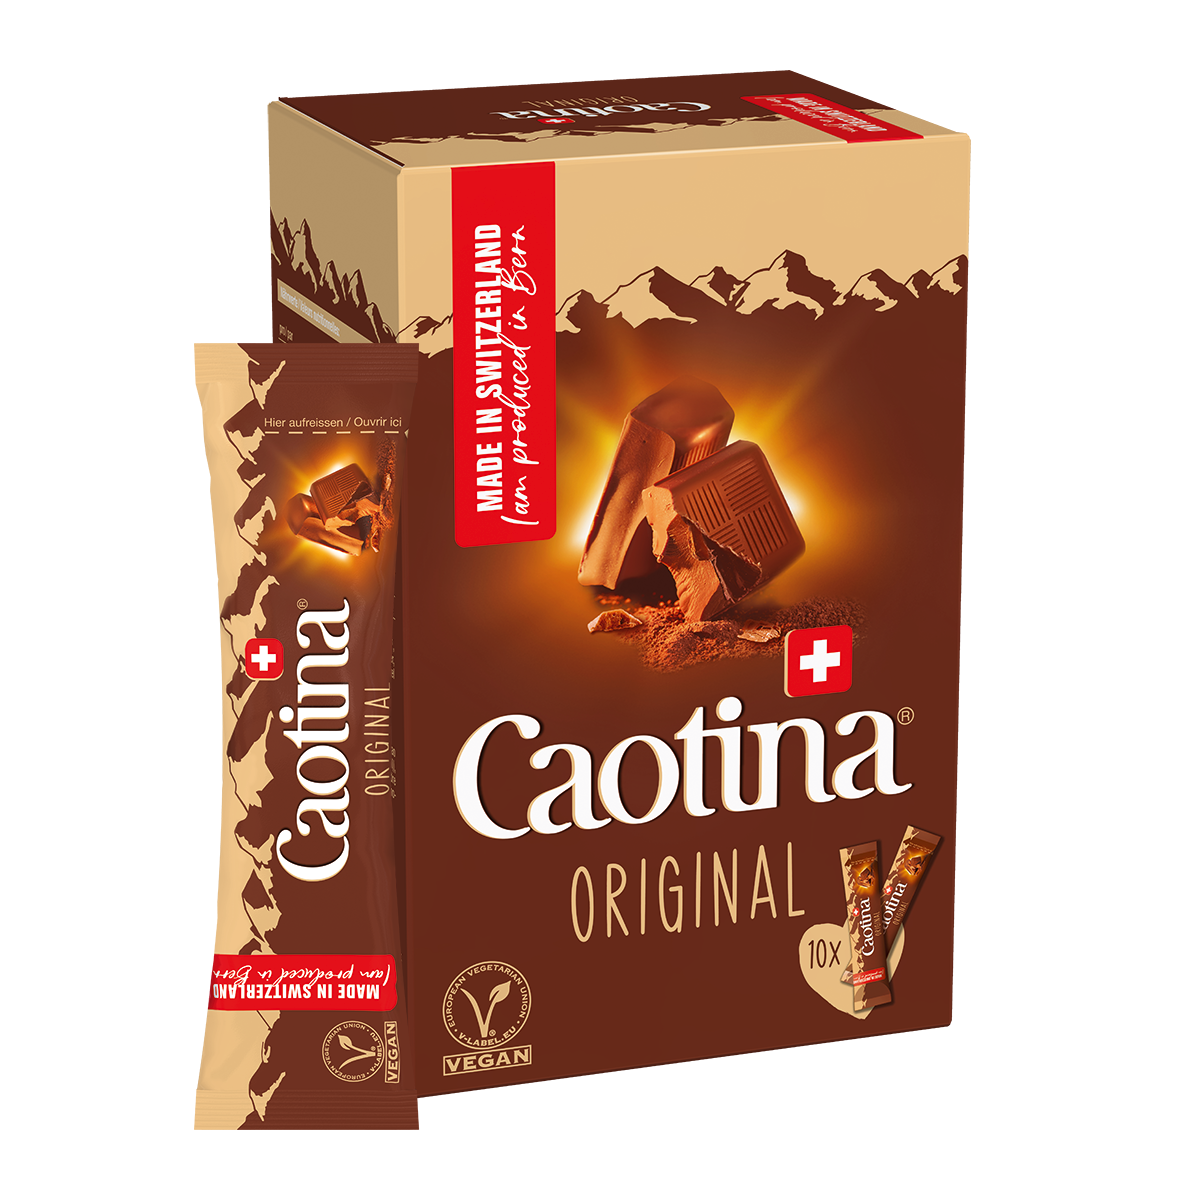  Caotina Original Stick Packs - der Klassiker in Klein